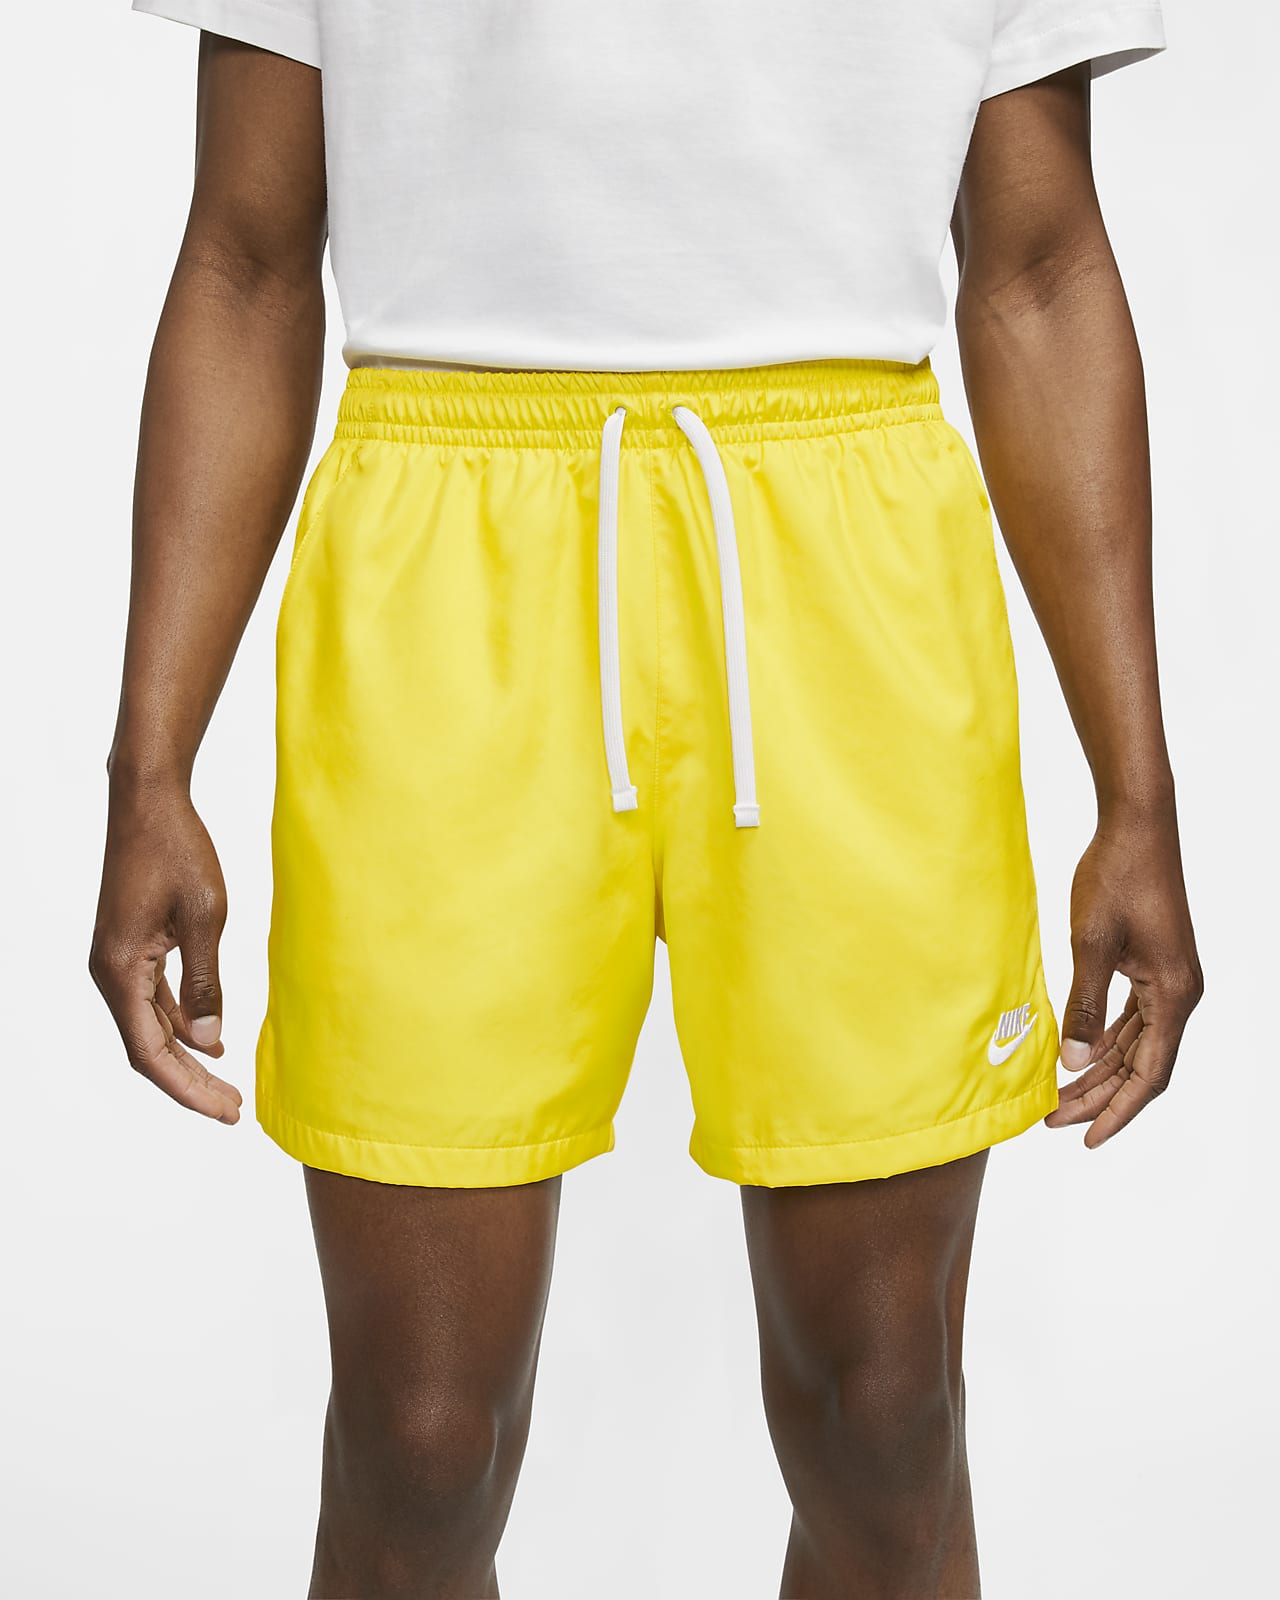 opti yellow nike shorts